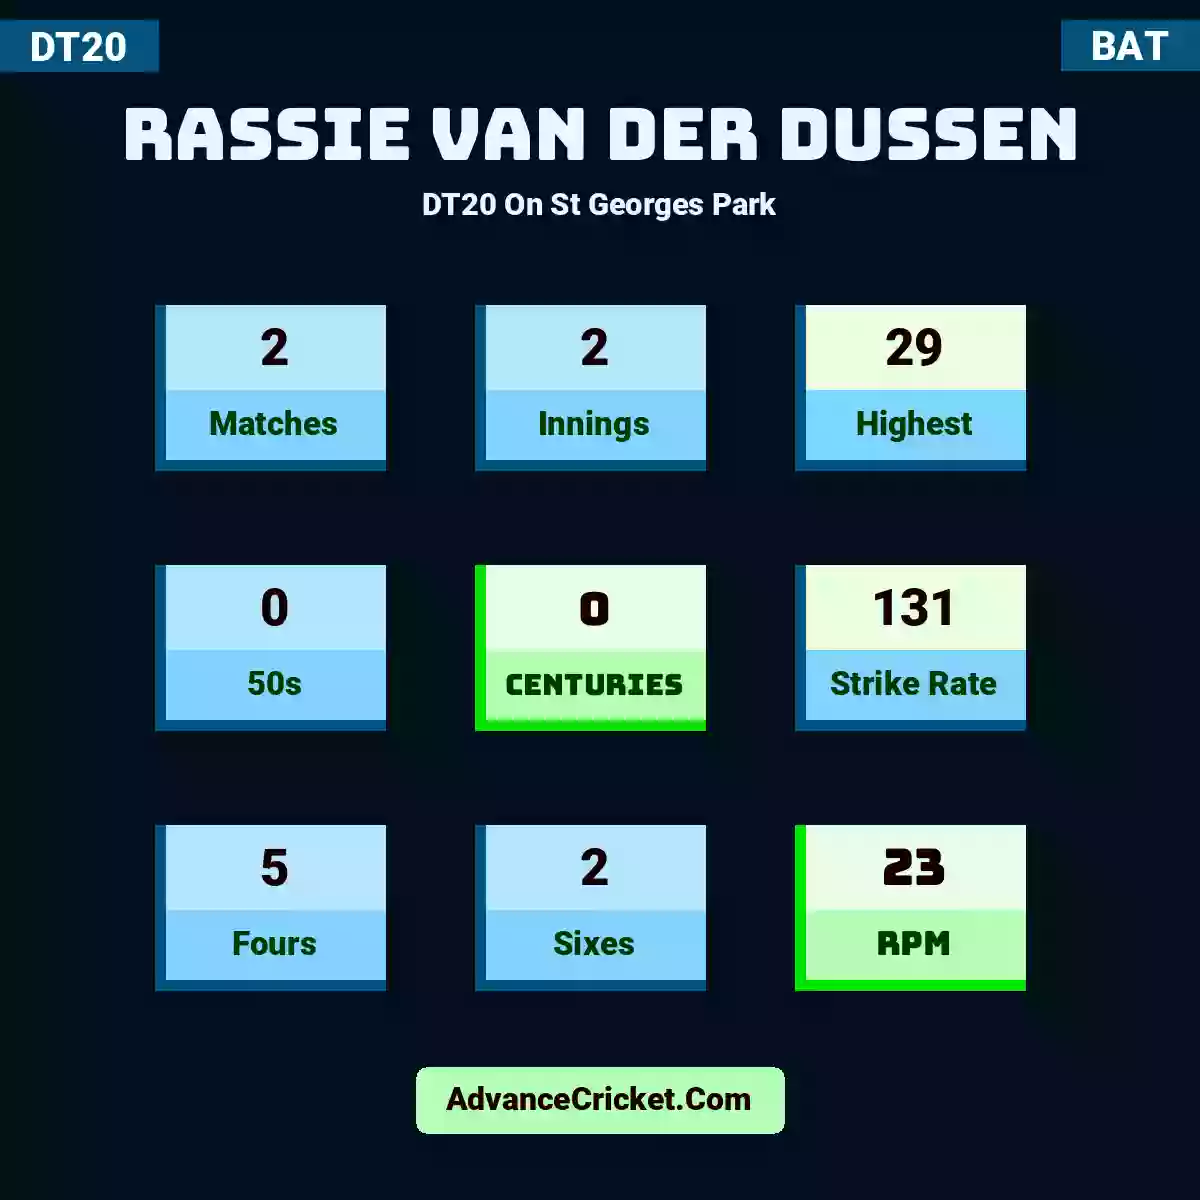 Rassie van der Dussen DT20  On St Georges Park, Rassie van der Dussen played 2 matches, scored 29 runs as highest, 0 half-centuries, and 0 centuries, with a strike rate of 131. R.Dussen hit 5 fours and 2 sixes, with an RPM of 23.